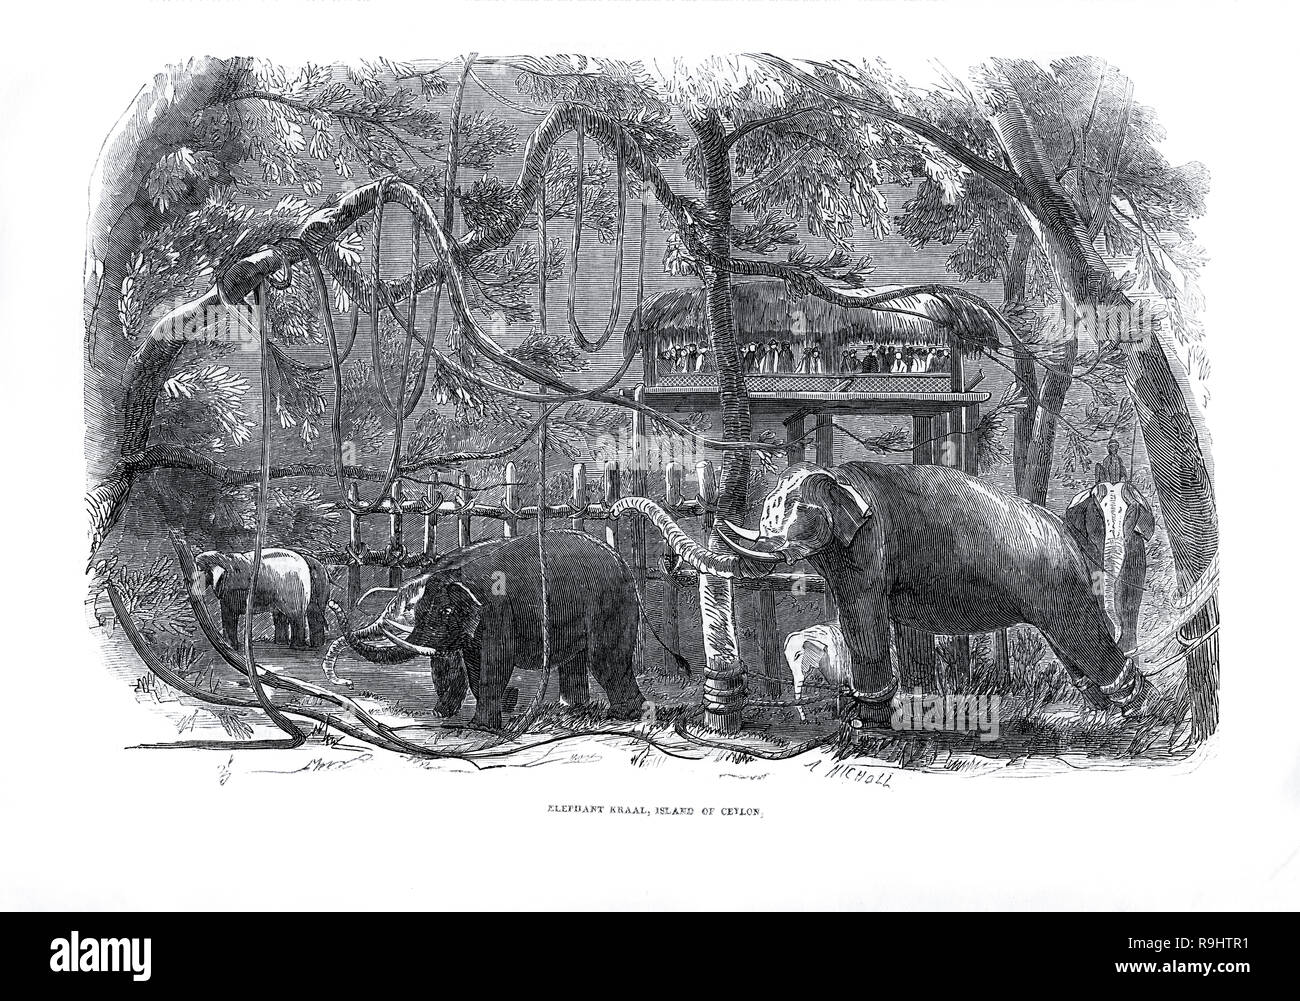 Viktorianische Gravur eines Elefanten Kraal in Ceylon (Sri Lanka) aus der Illustrated London News 1851 Stockfoto